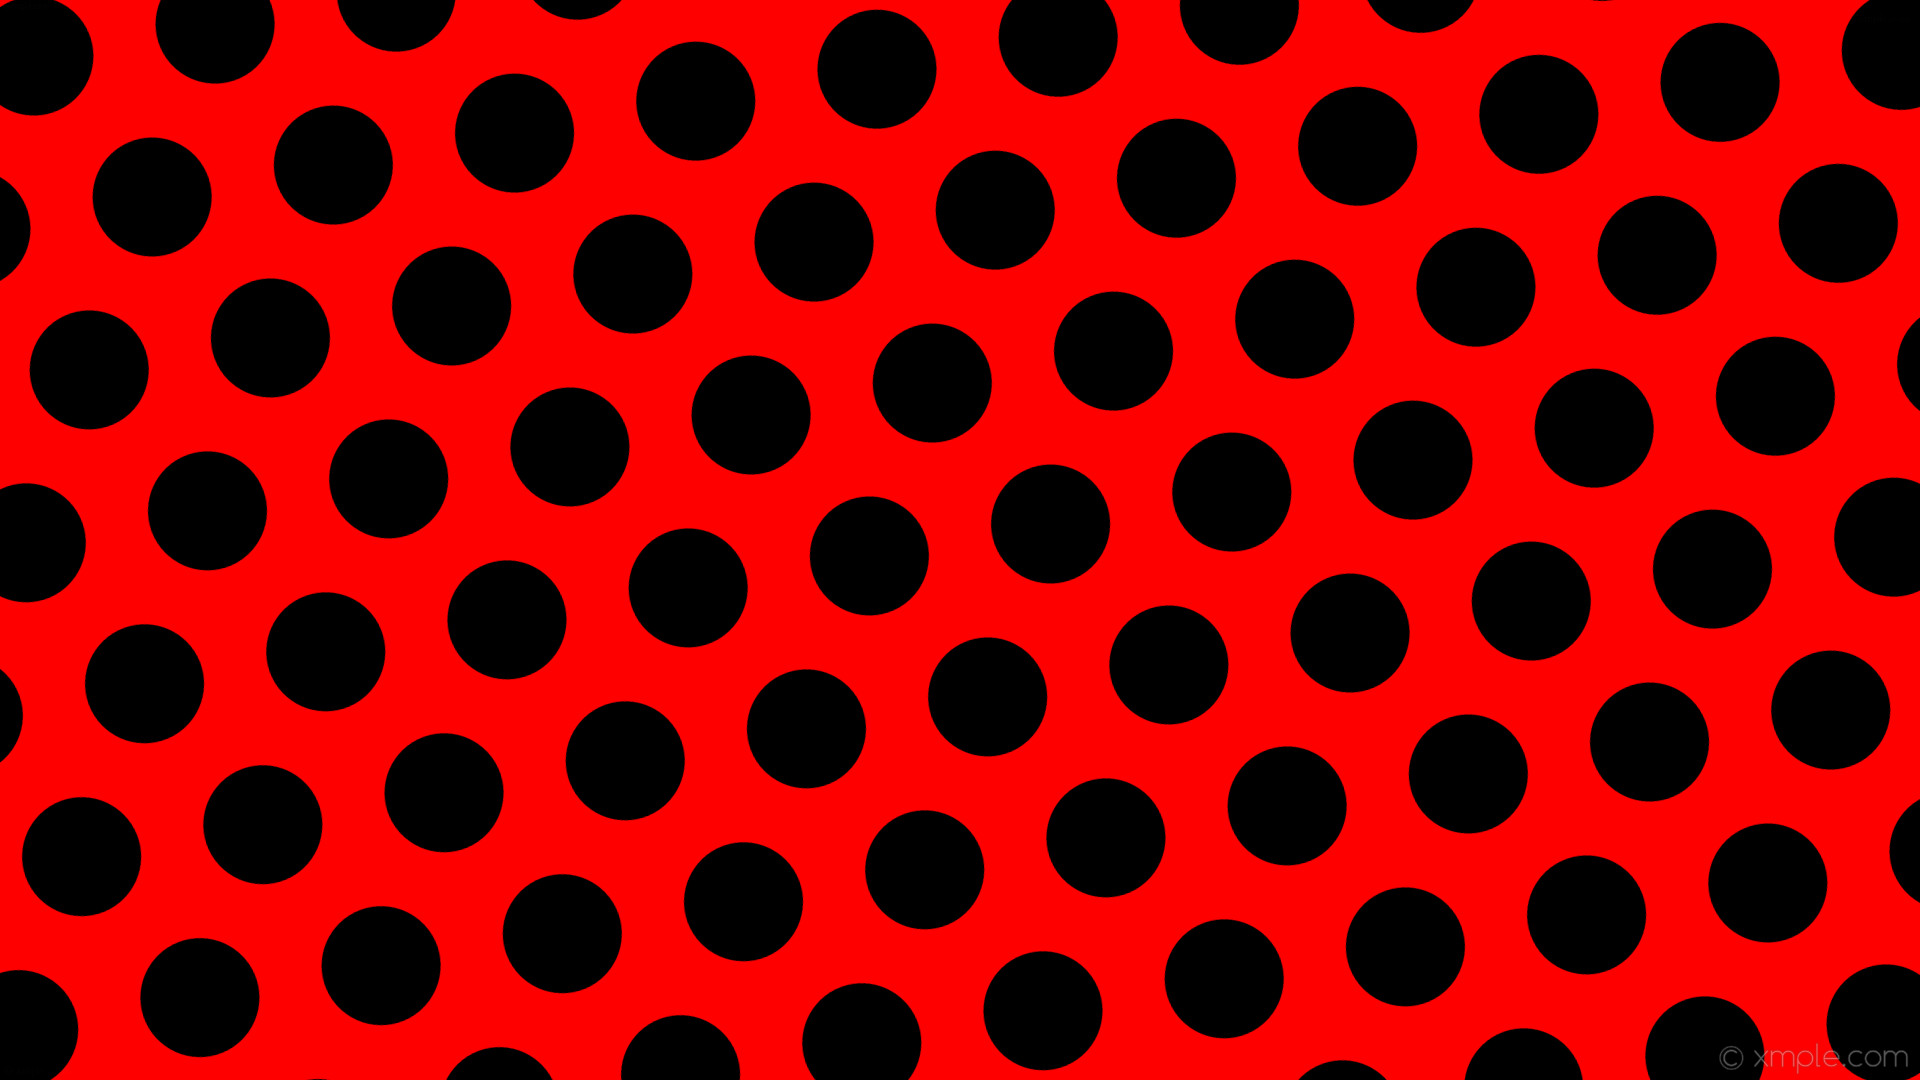 1920x1080 Wallpaper black polka dots hexagon red #ff0000 #000000 diagonal 10Â° 119px  184px